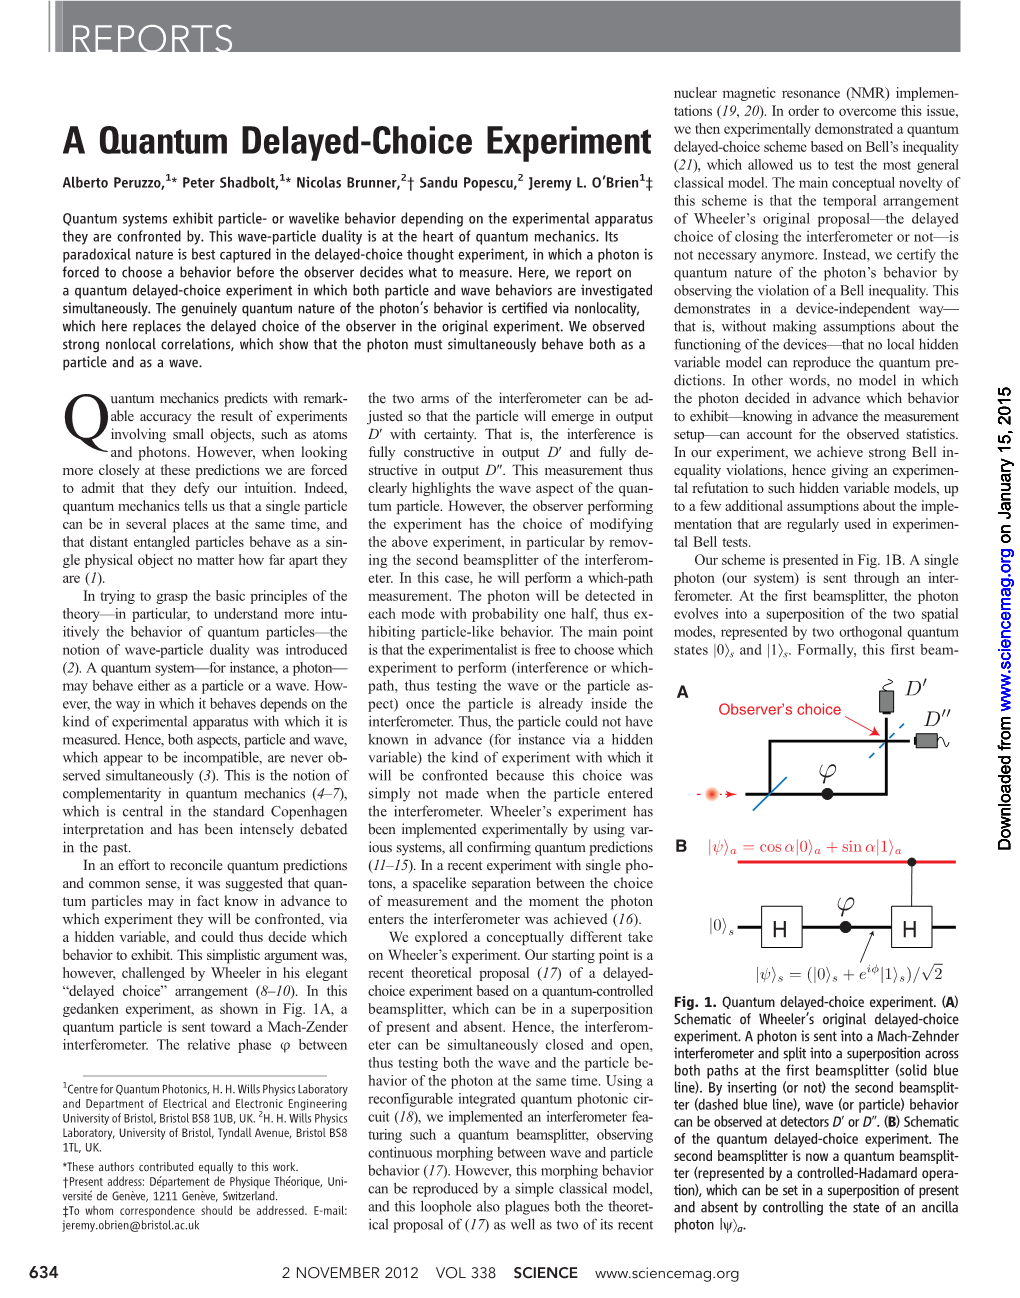 A Quantum Delayed-Choice Experiment REPORTS